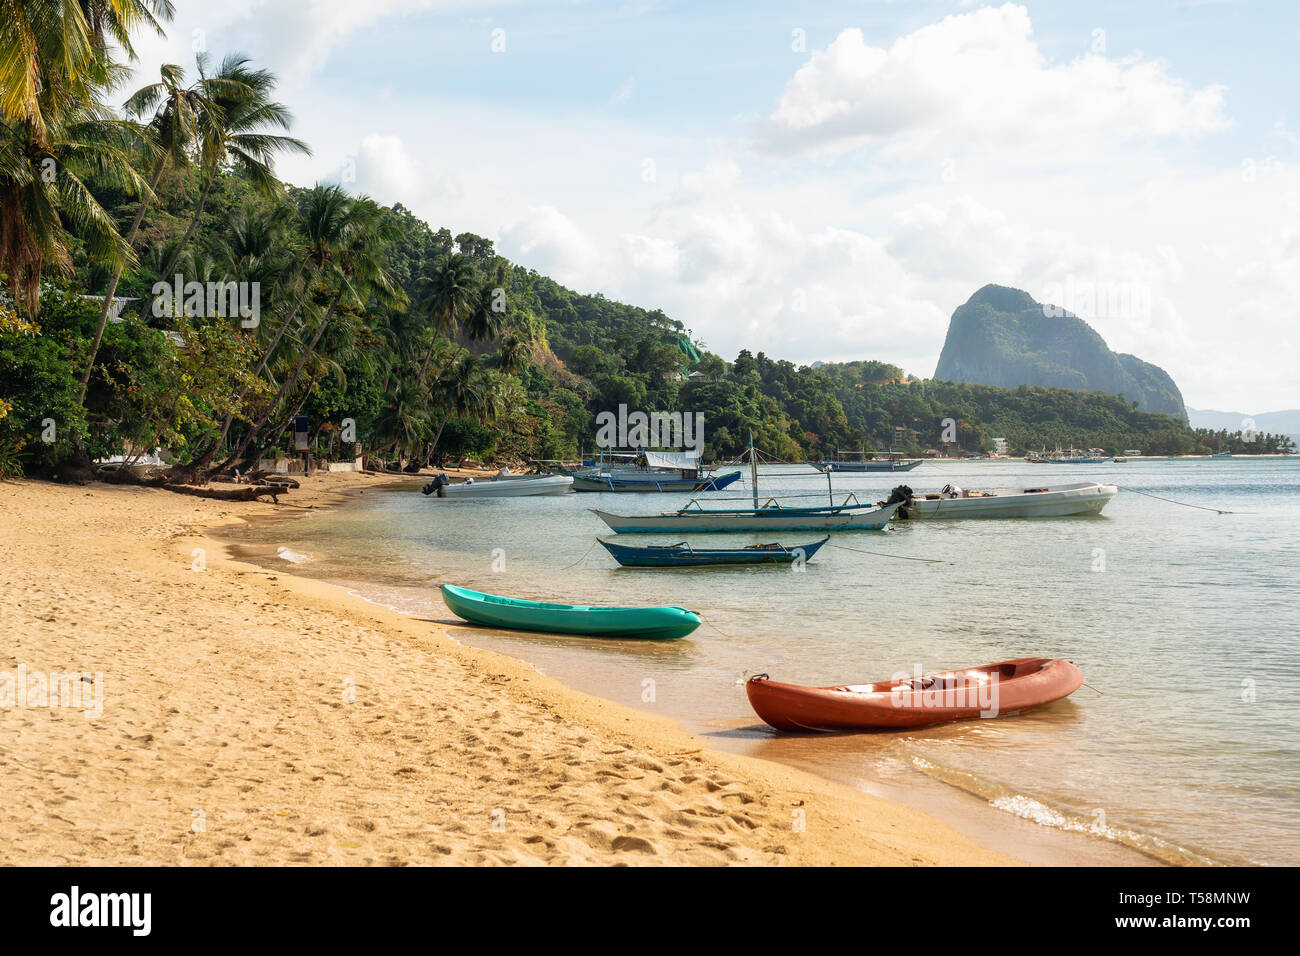 Corong Corong beach with traditional boats in El Nido, Palawan island, Philippines Stock Photo